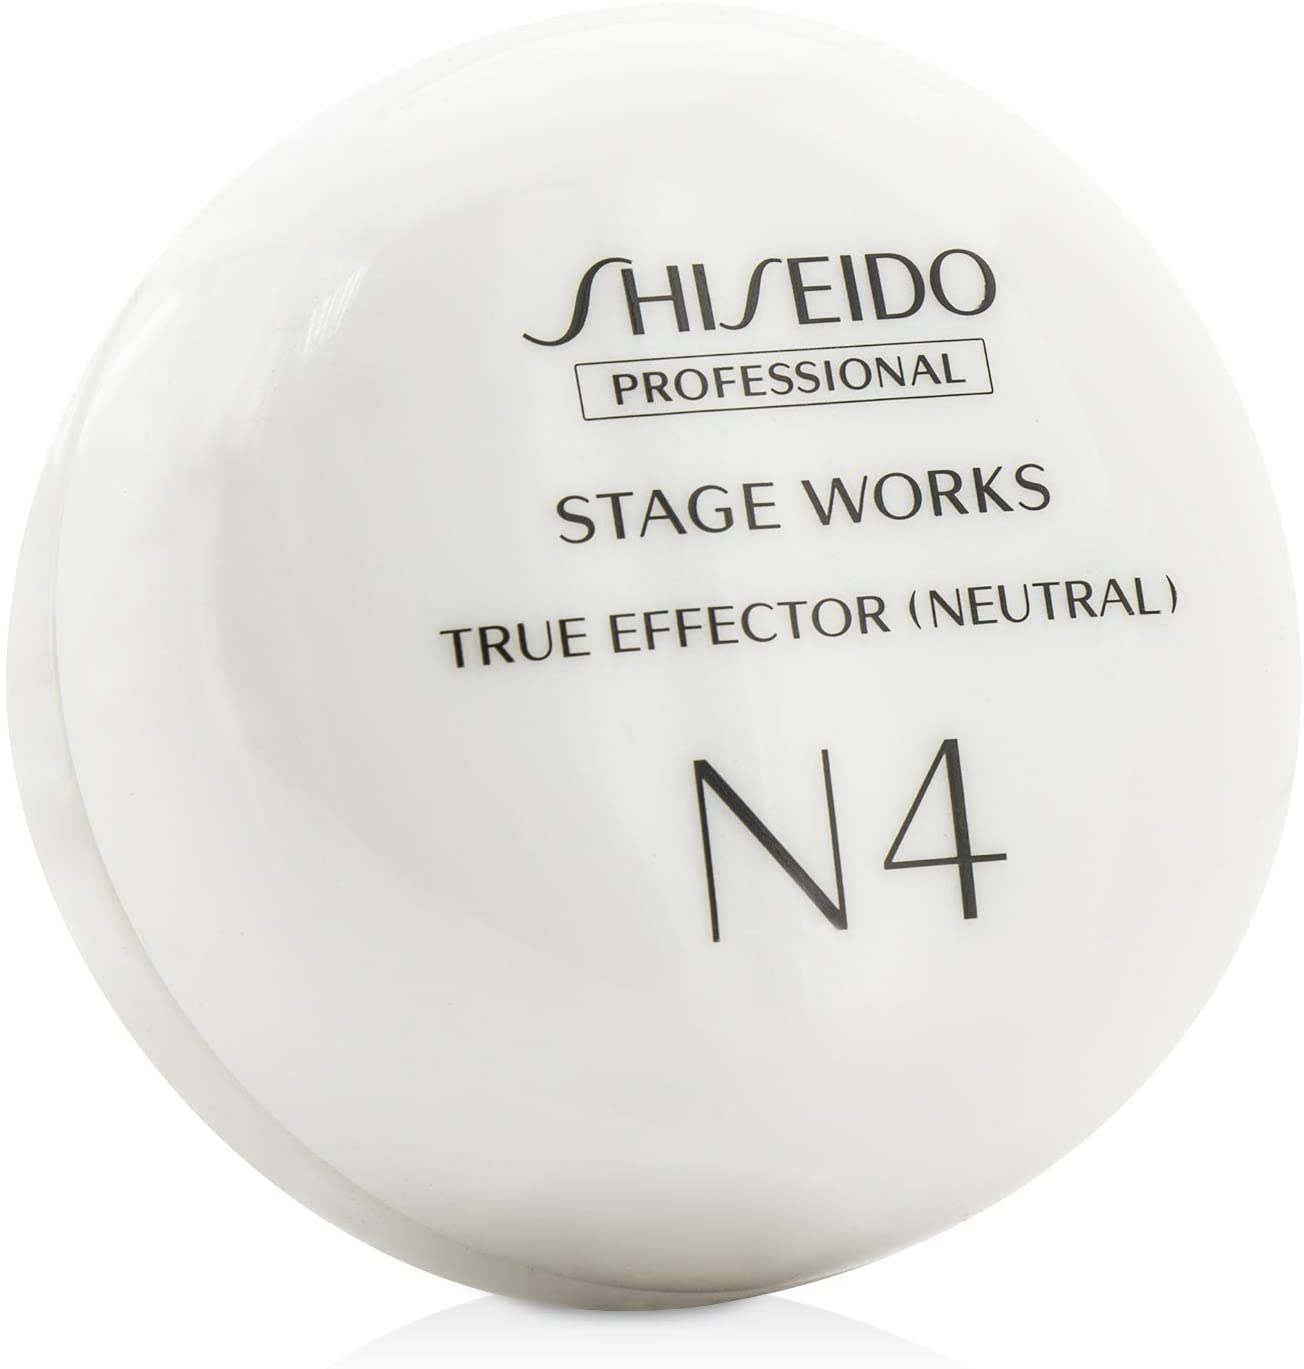 Крем для укладки волос Professional Stage Works True Effector (Neutral) Shiseido, 80 гр